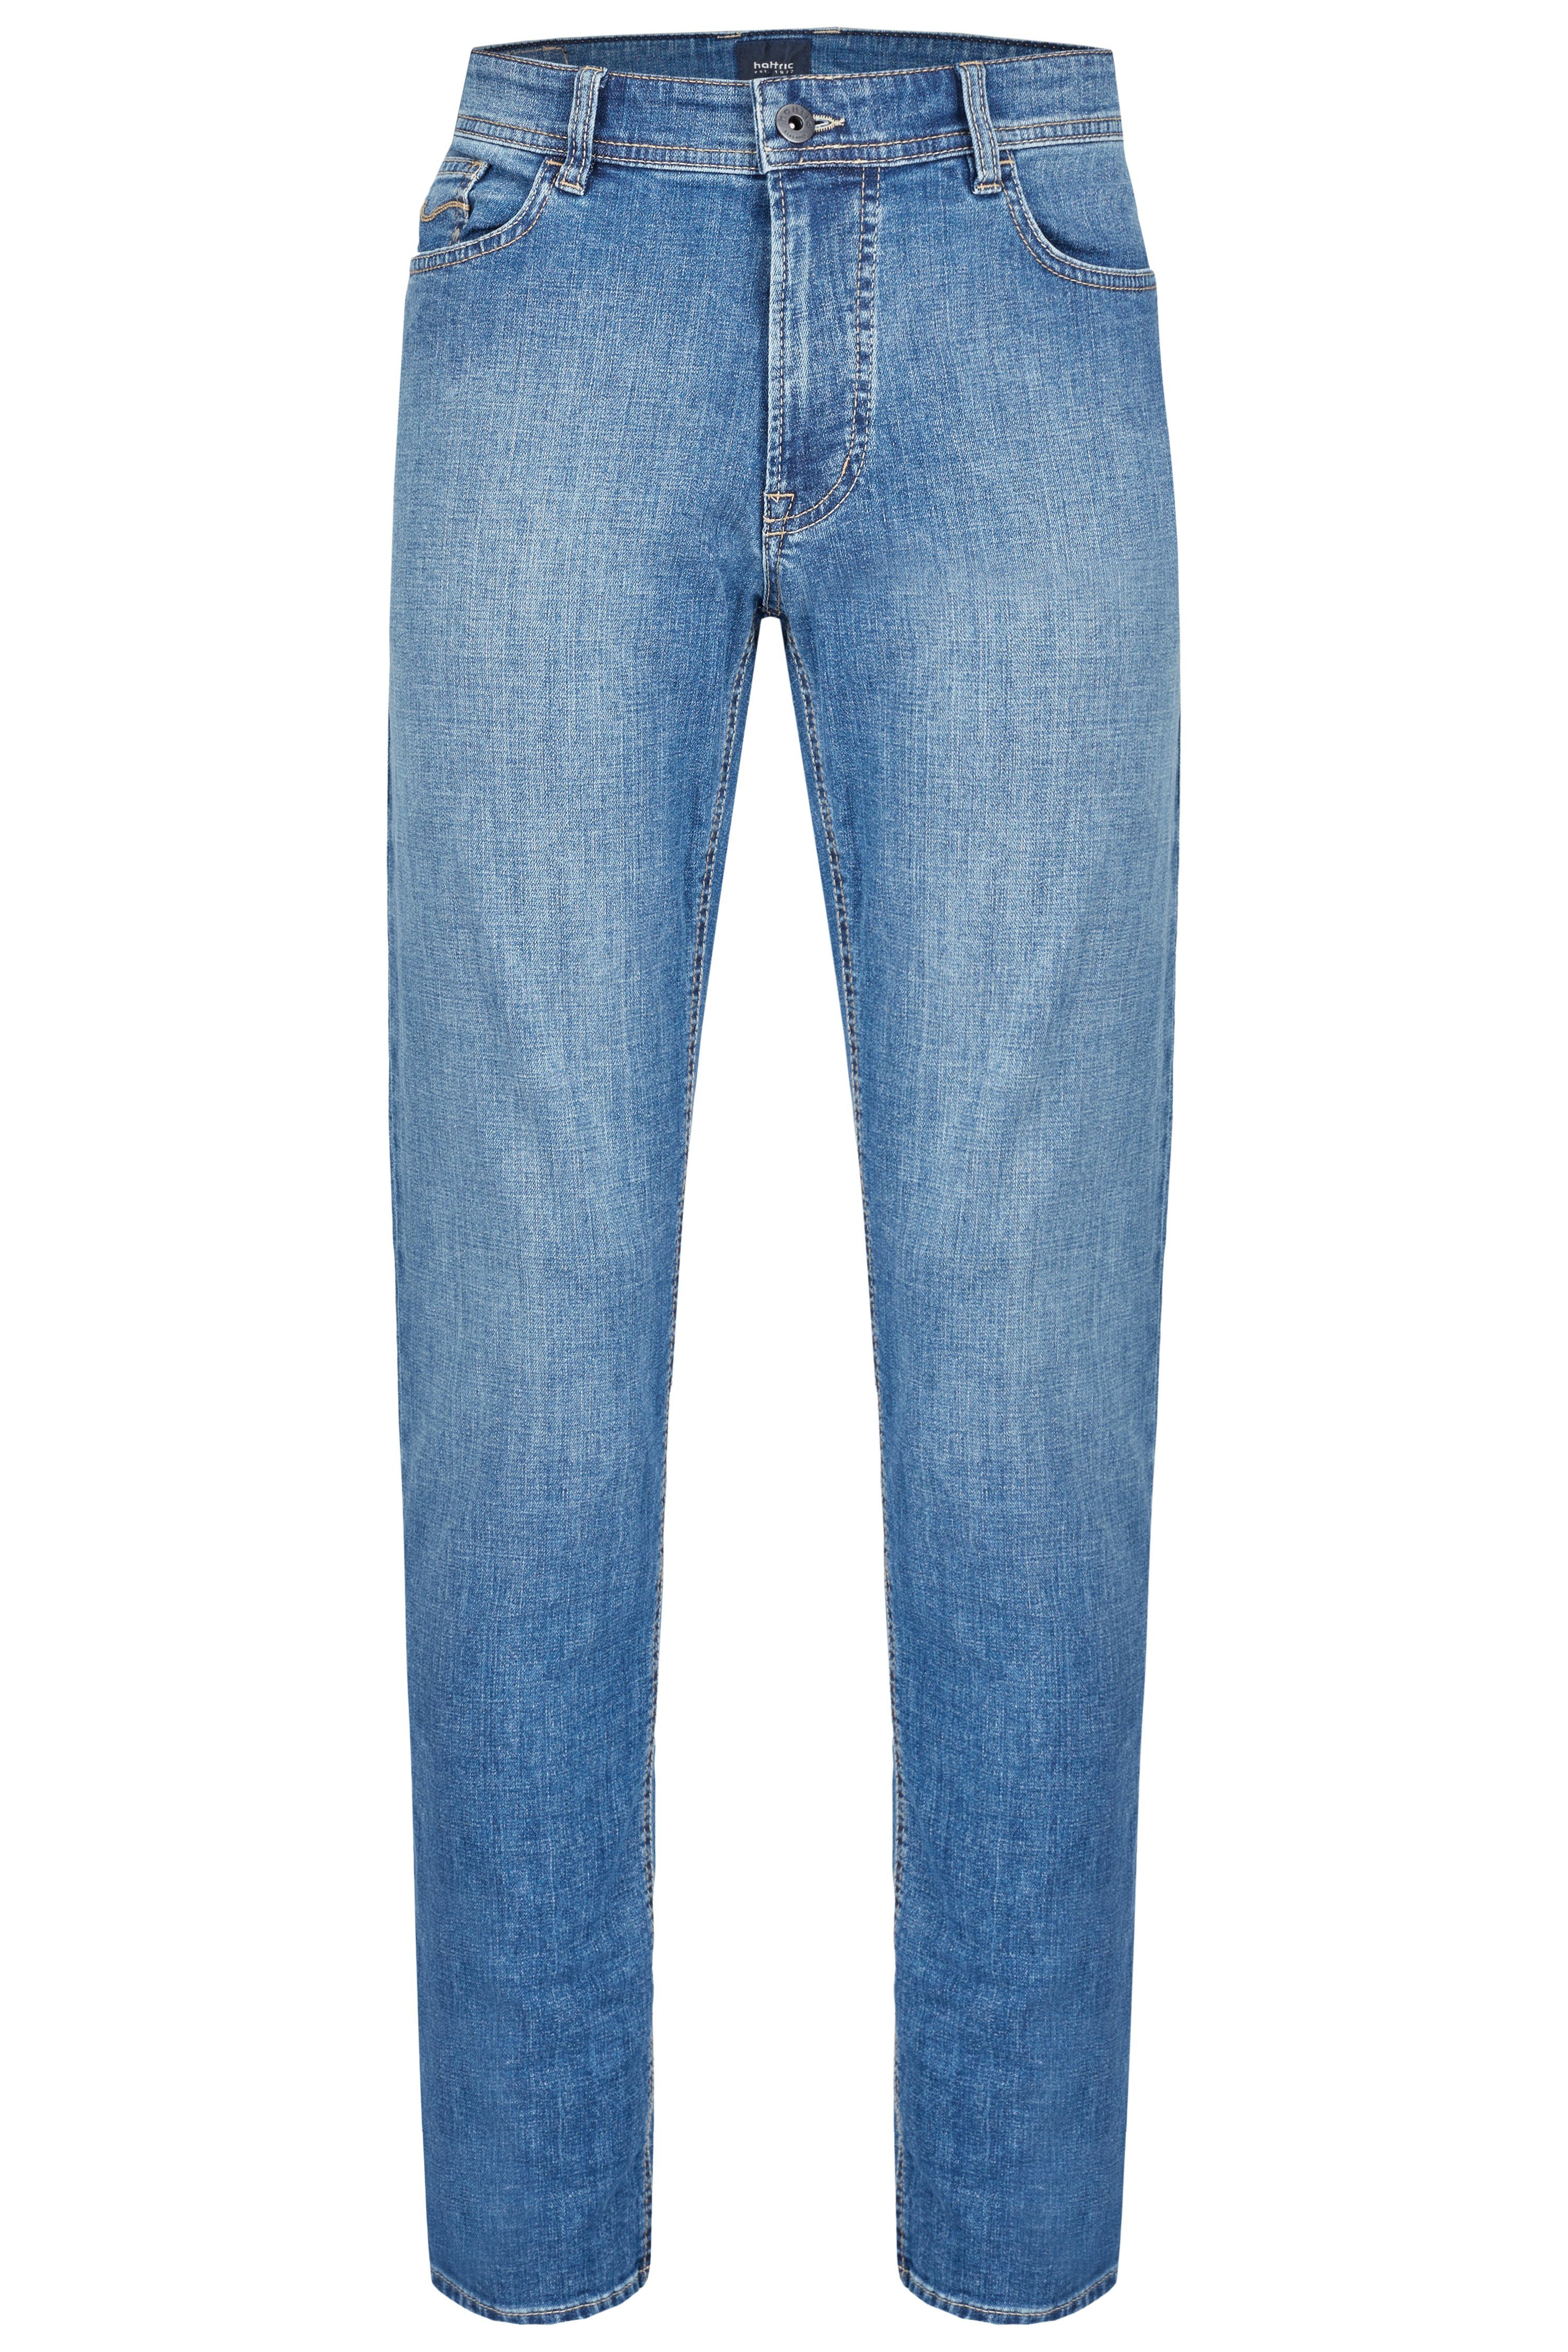 Hattric 5-Pocket-Jeans HATTRIC HUNTER AUTHENTIC light blue 688525 9214.44